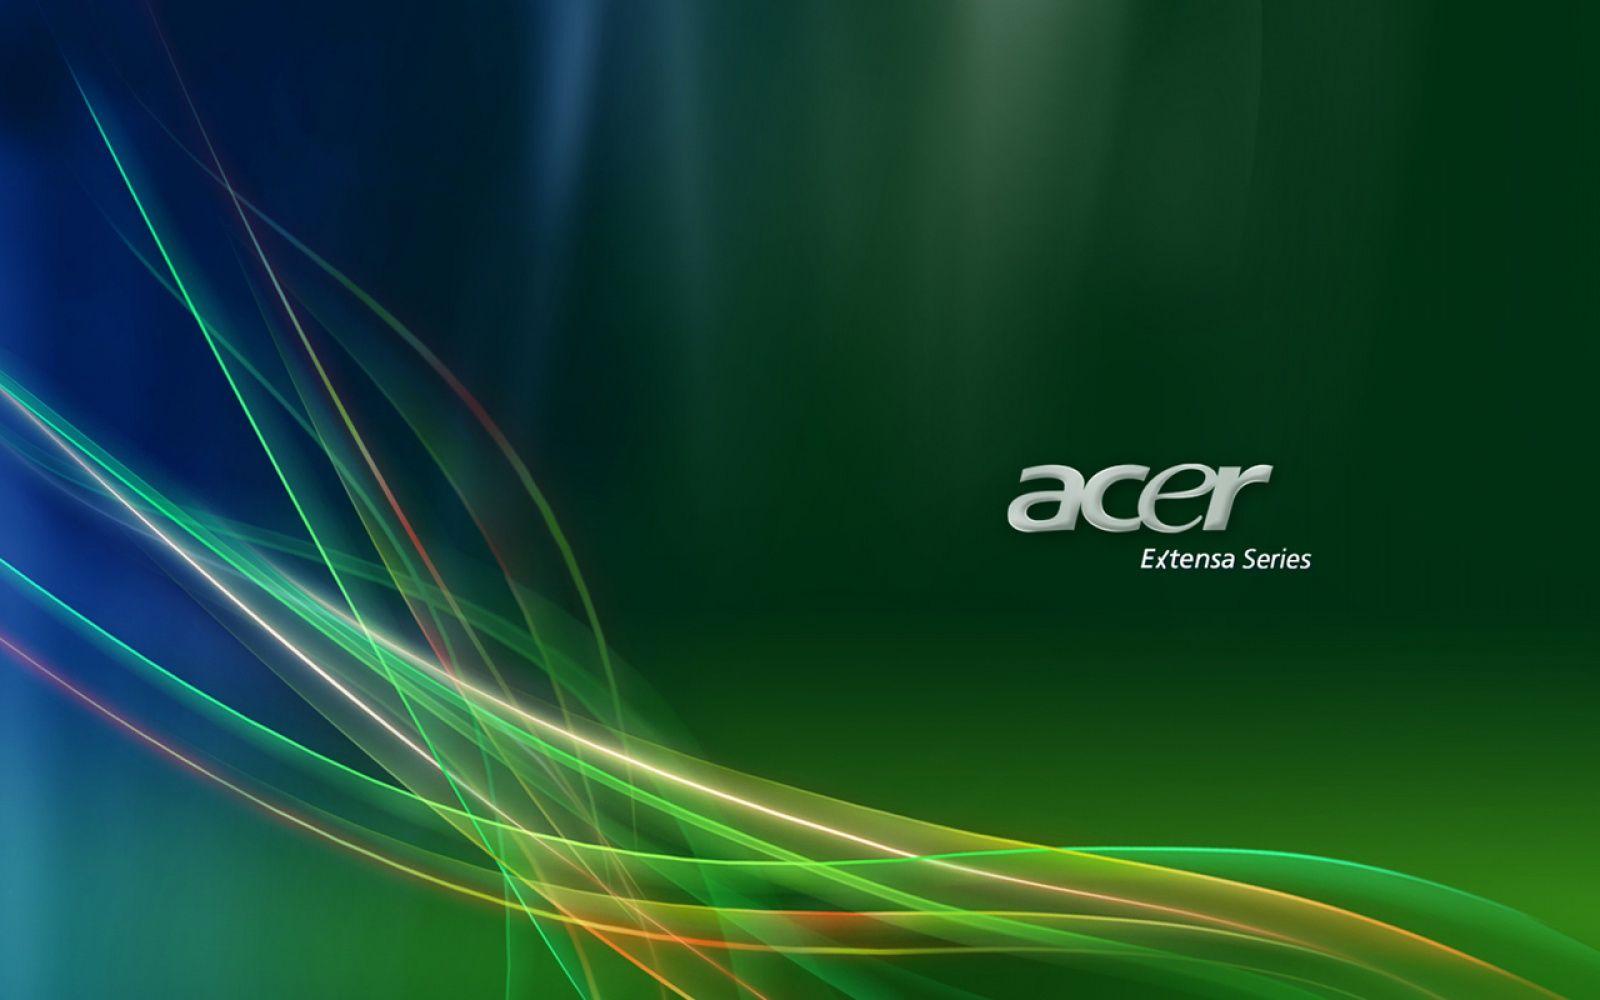 Acer Desktop Background Wallpaper. HD Wallpaper в 2019 г